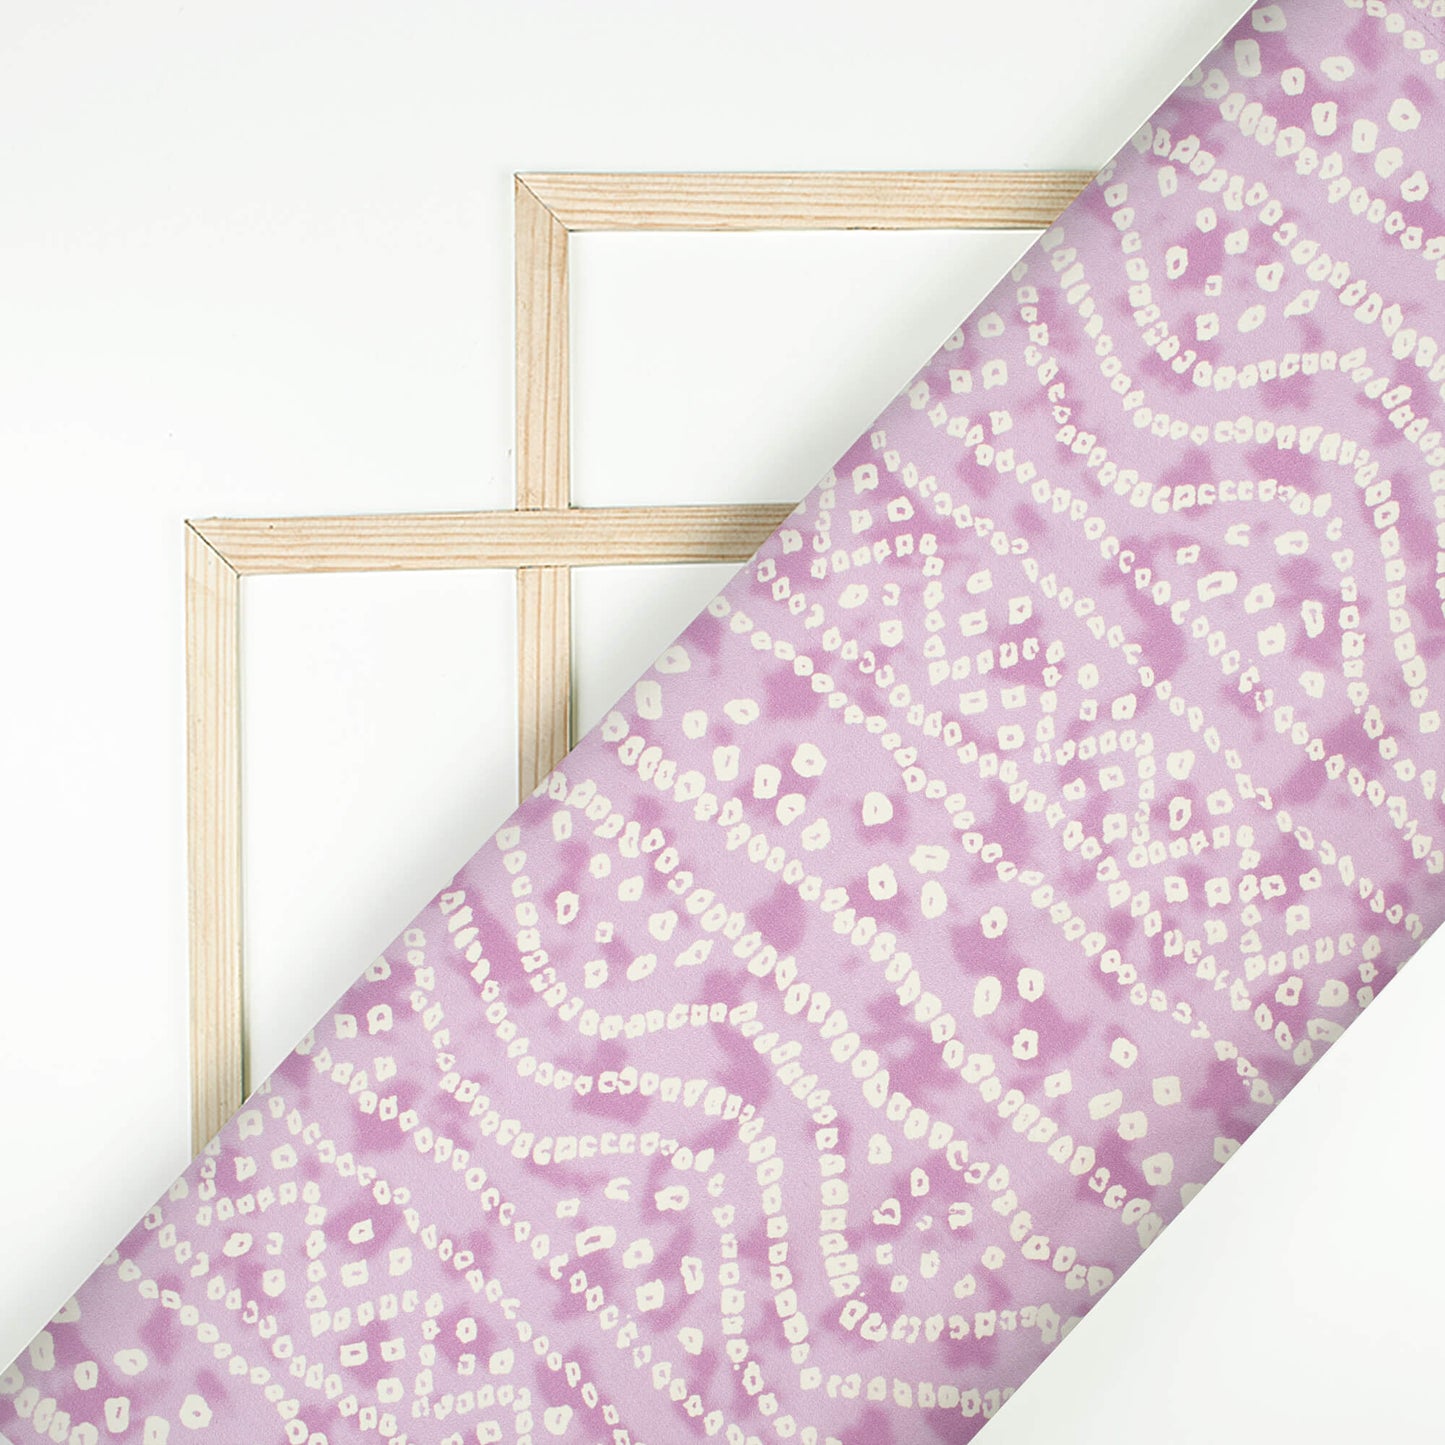 Heather Purple And Cream Bandhani Pattern Digital Print Japan Satin Fabric